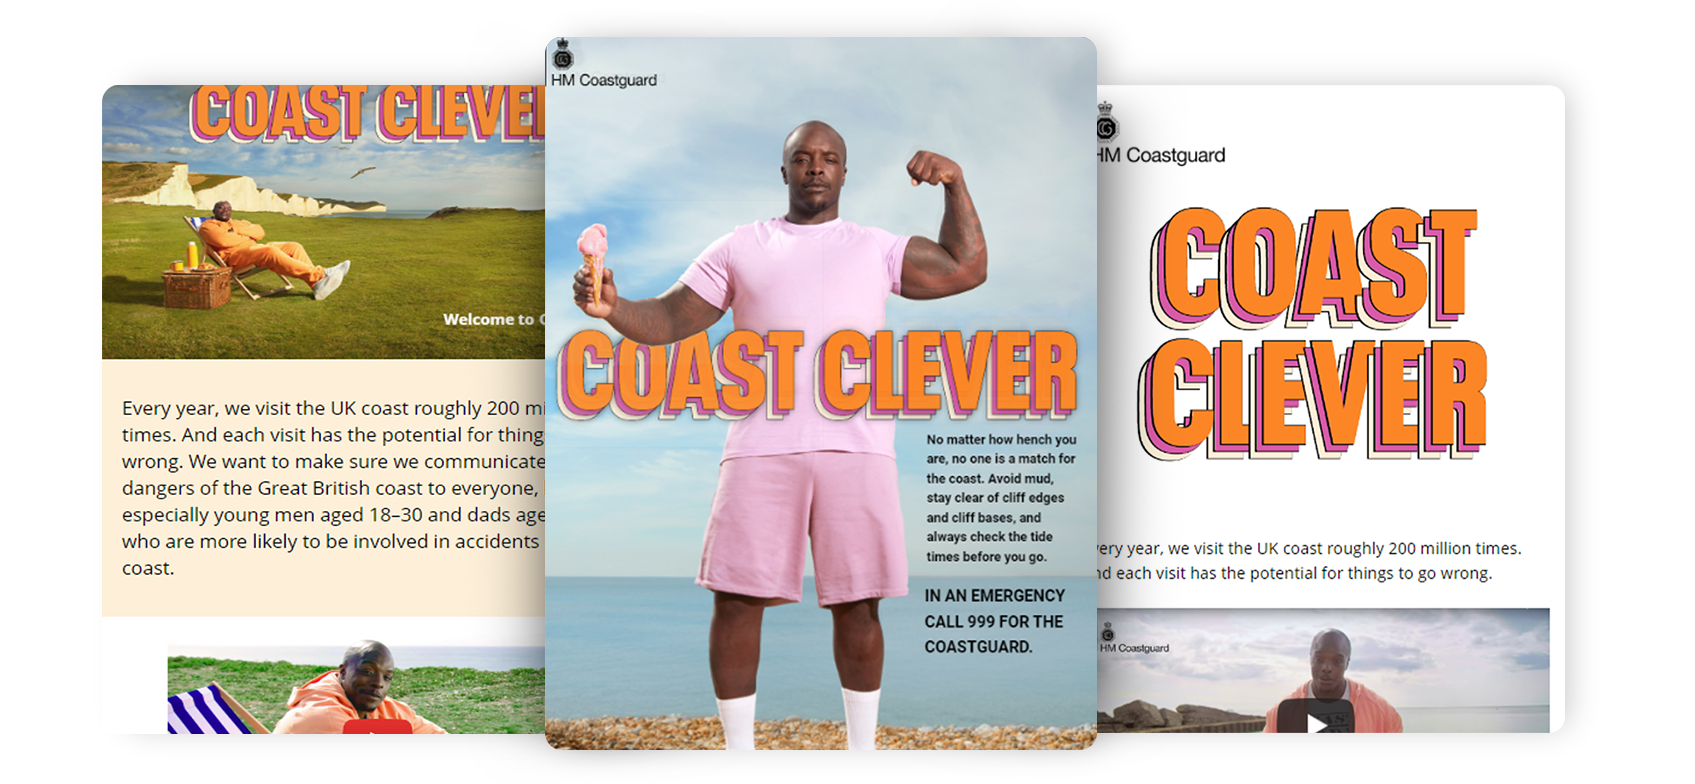 Email Library Campaign: Coast Clever HM Coastguard Campaign